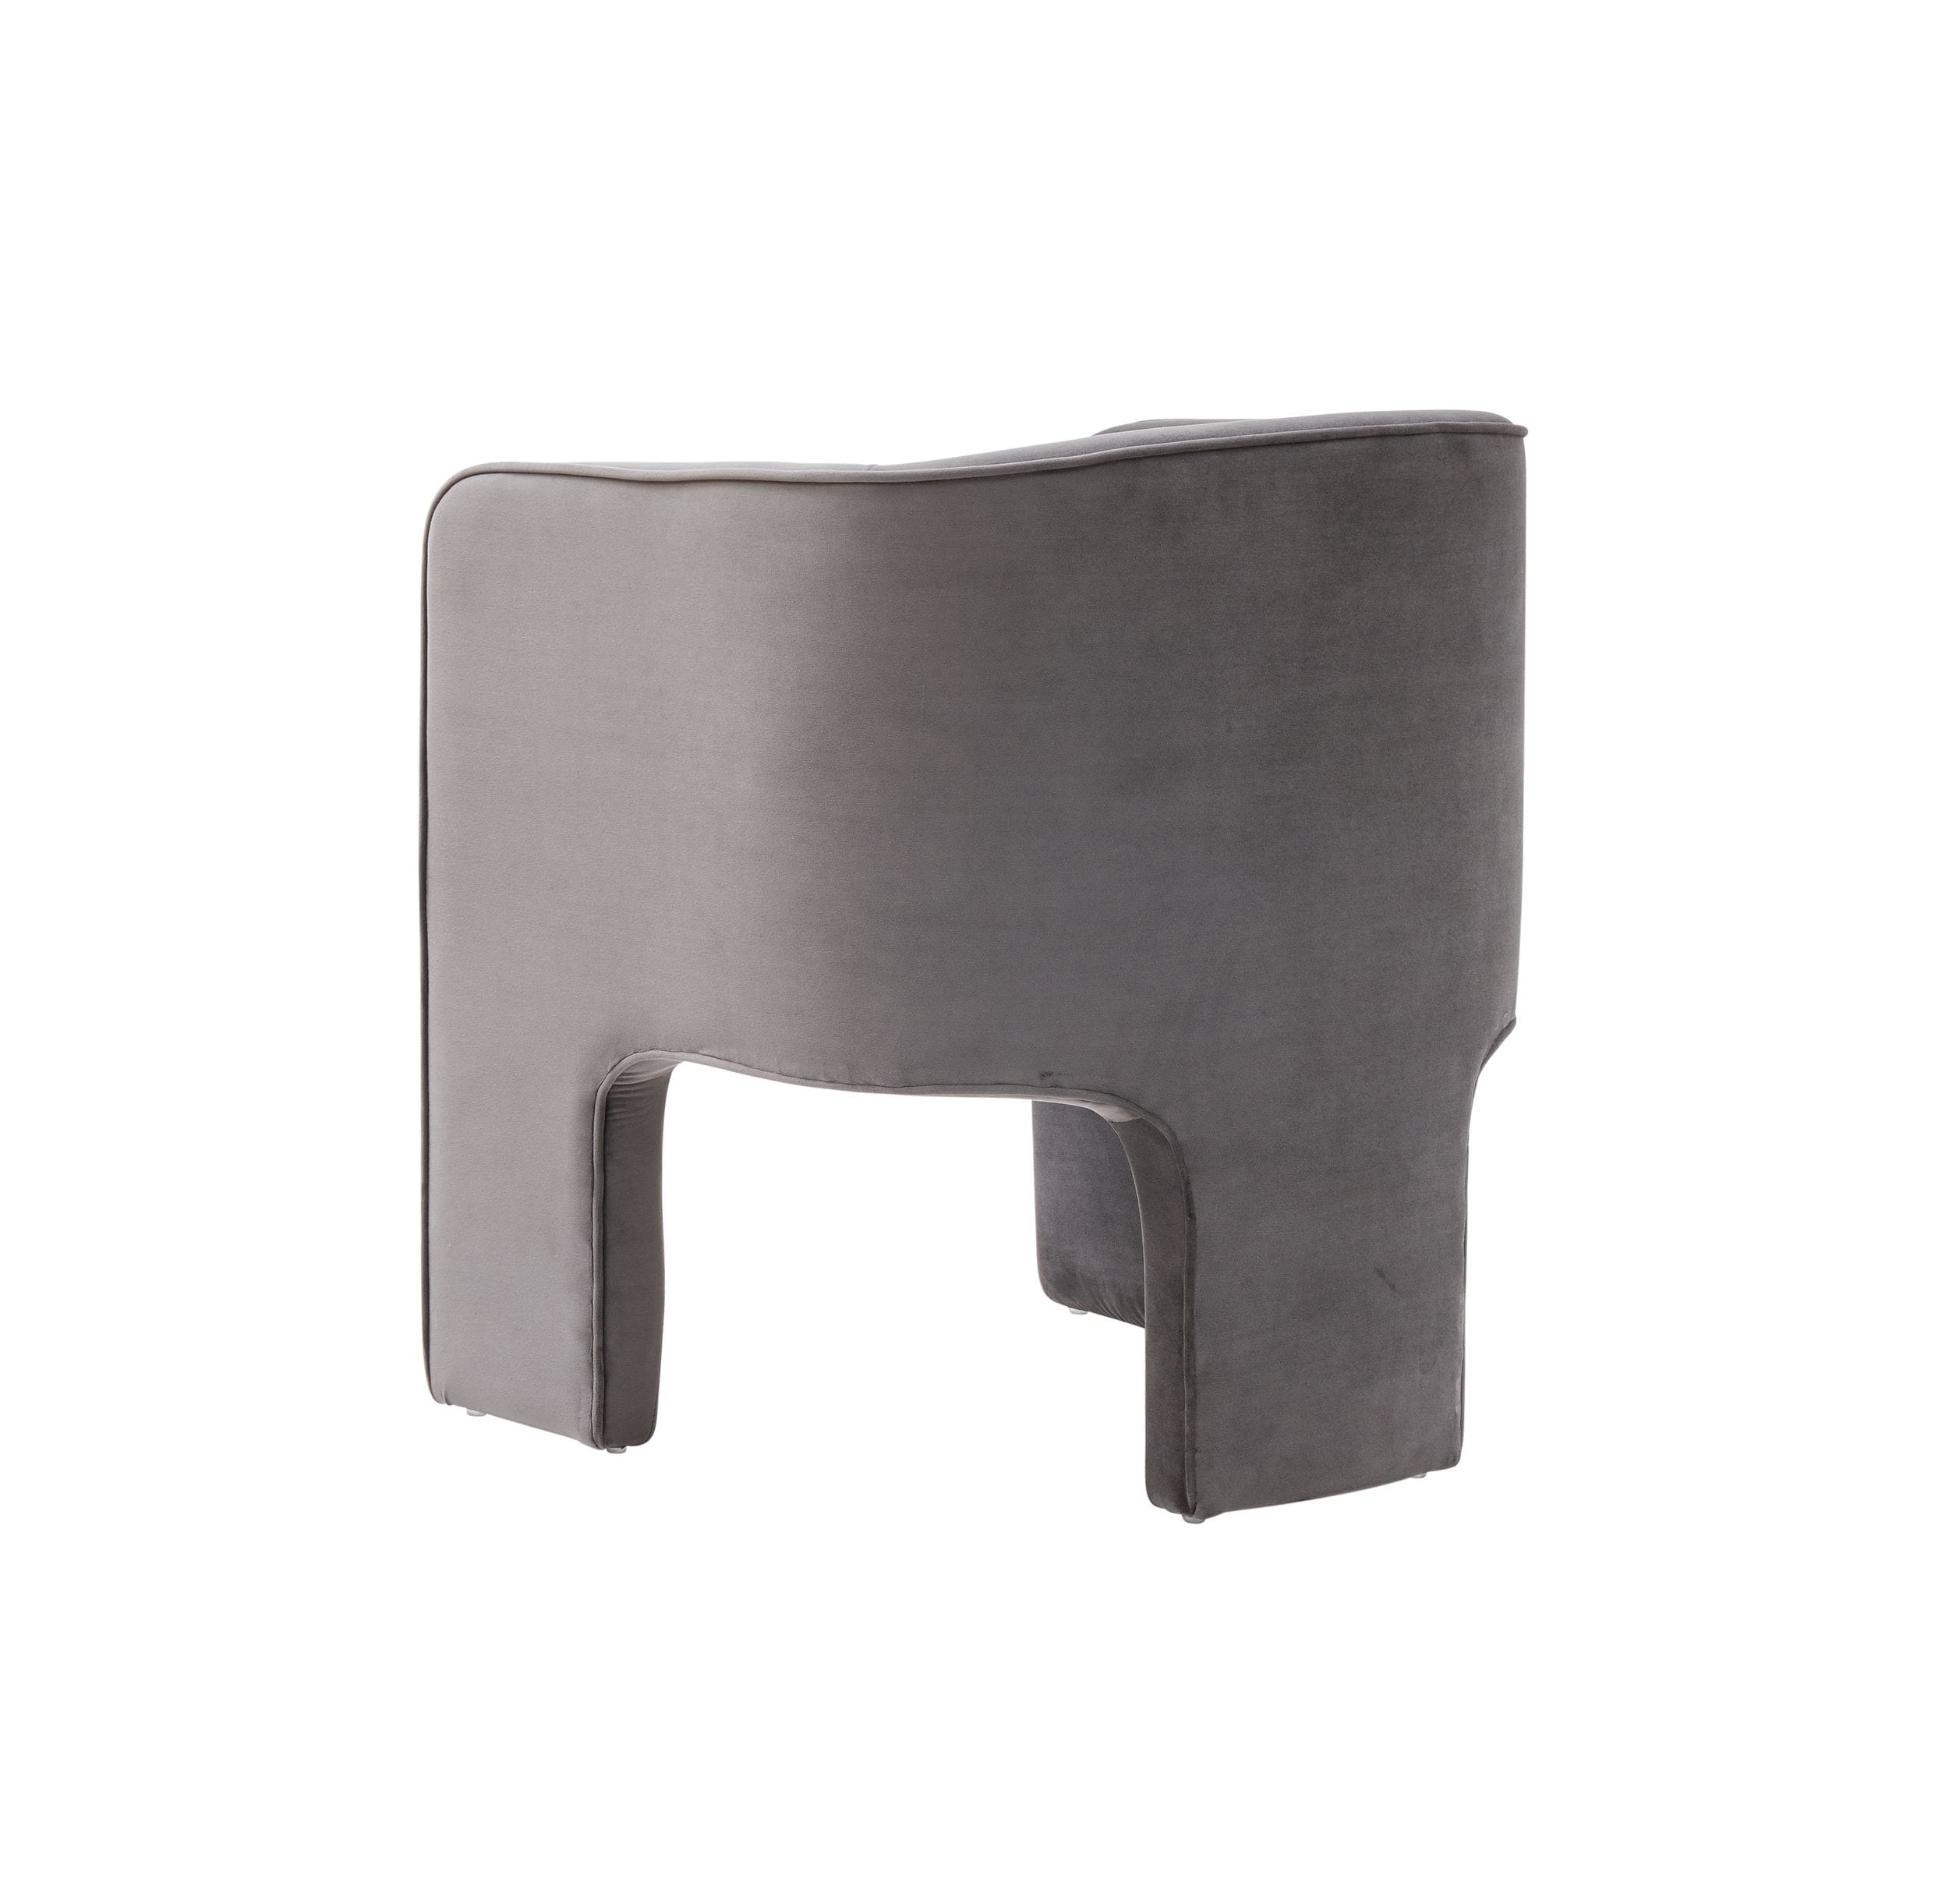 Modrest Kyle Modern Dark Grey Accent Chair-Lounge Chair-VIG-Wall2Wall Furnishings